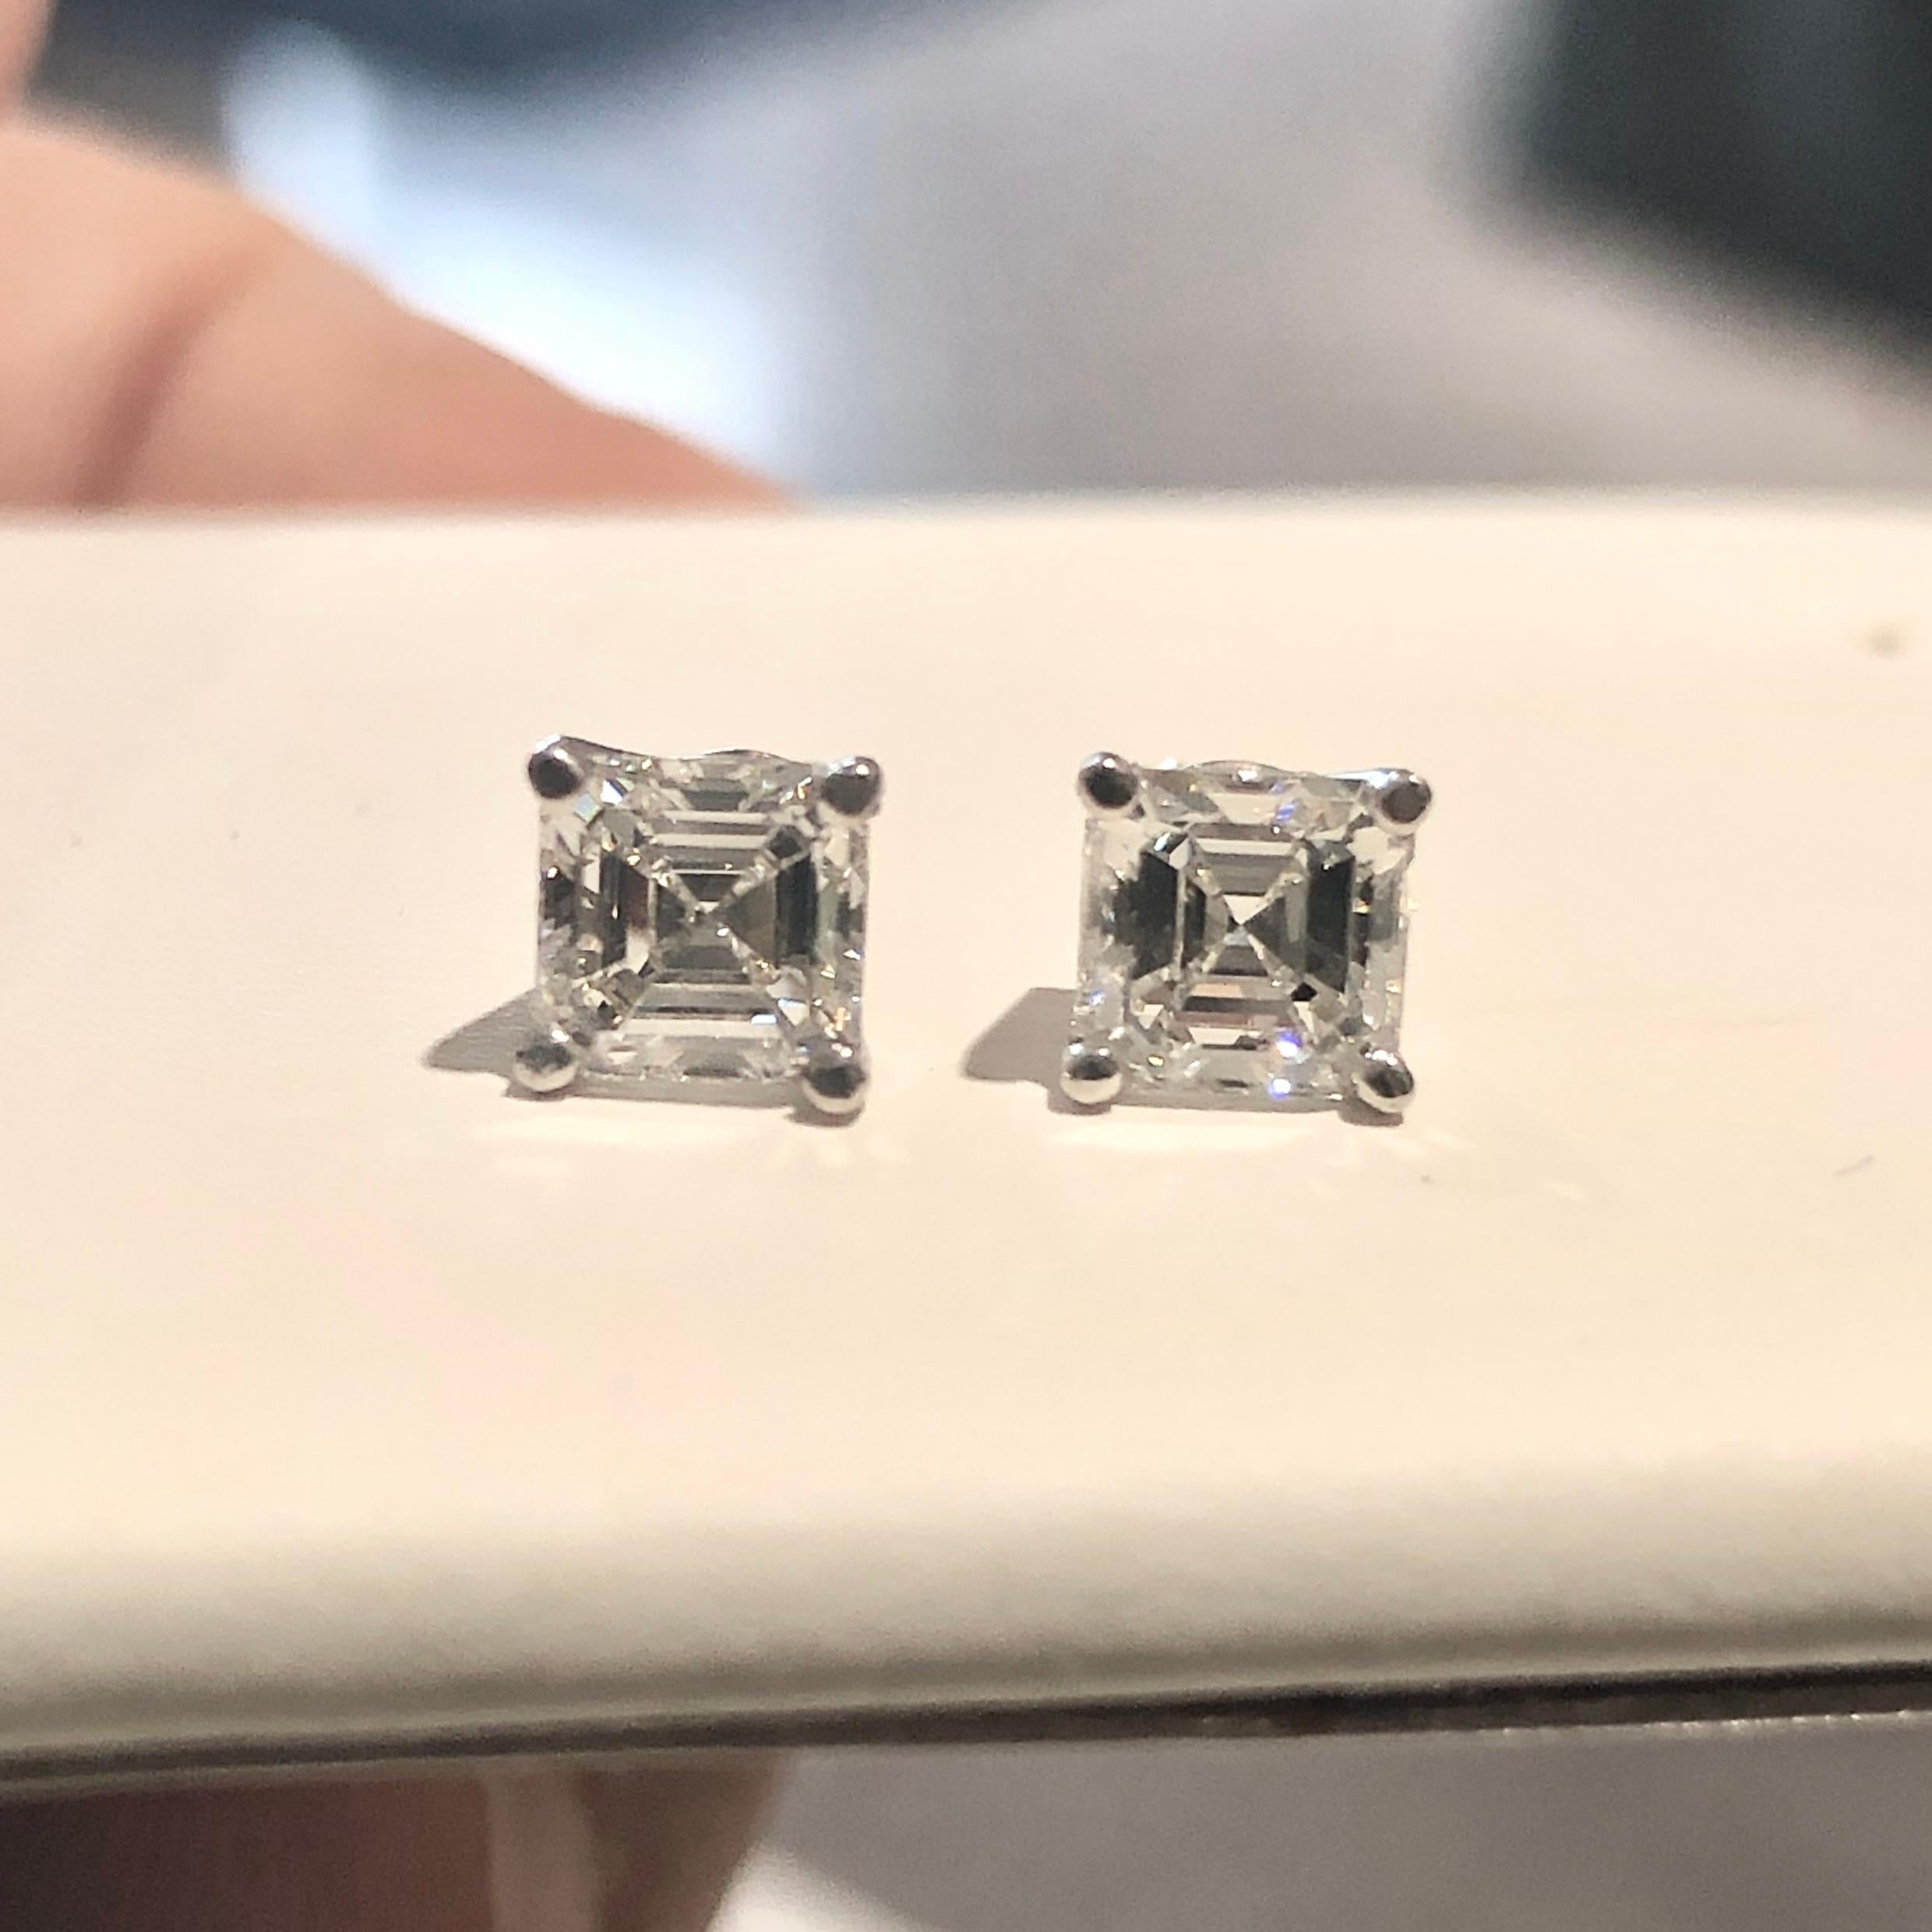 GIA Asscher cut diamond stud earrings 1.07 carat.  Style prong basket setting in 14K Gold. GIA Certified.   
1 asscher cut F- VS1 diamond, Approximate 0.54 carats. GIA Certificate 
1 asscher cut F-VS1 diamond, Approximate 0.53 carats. GIA certificate